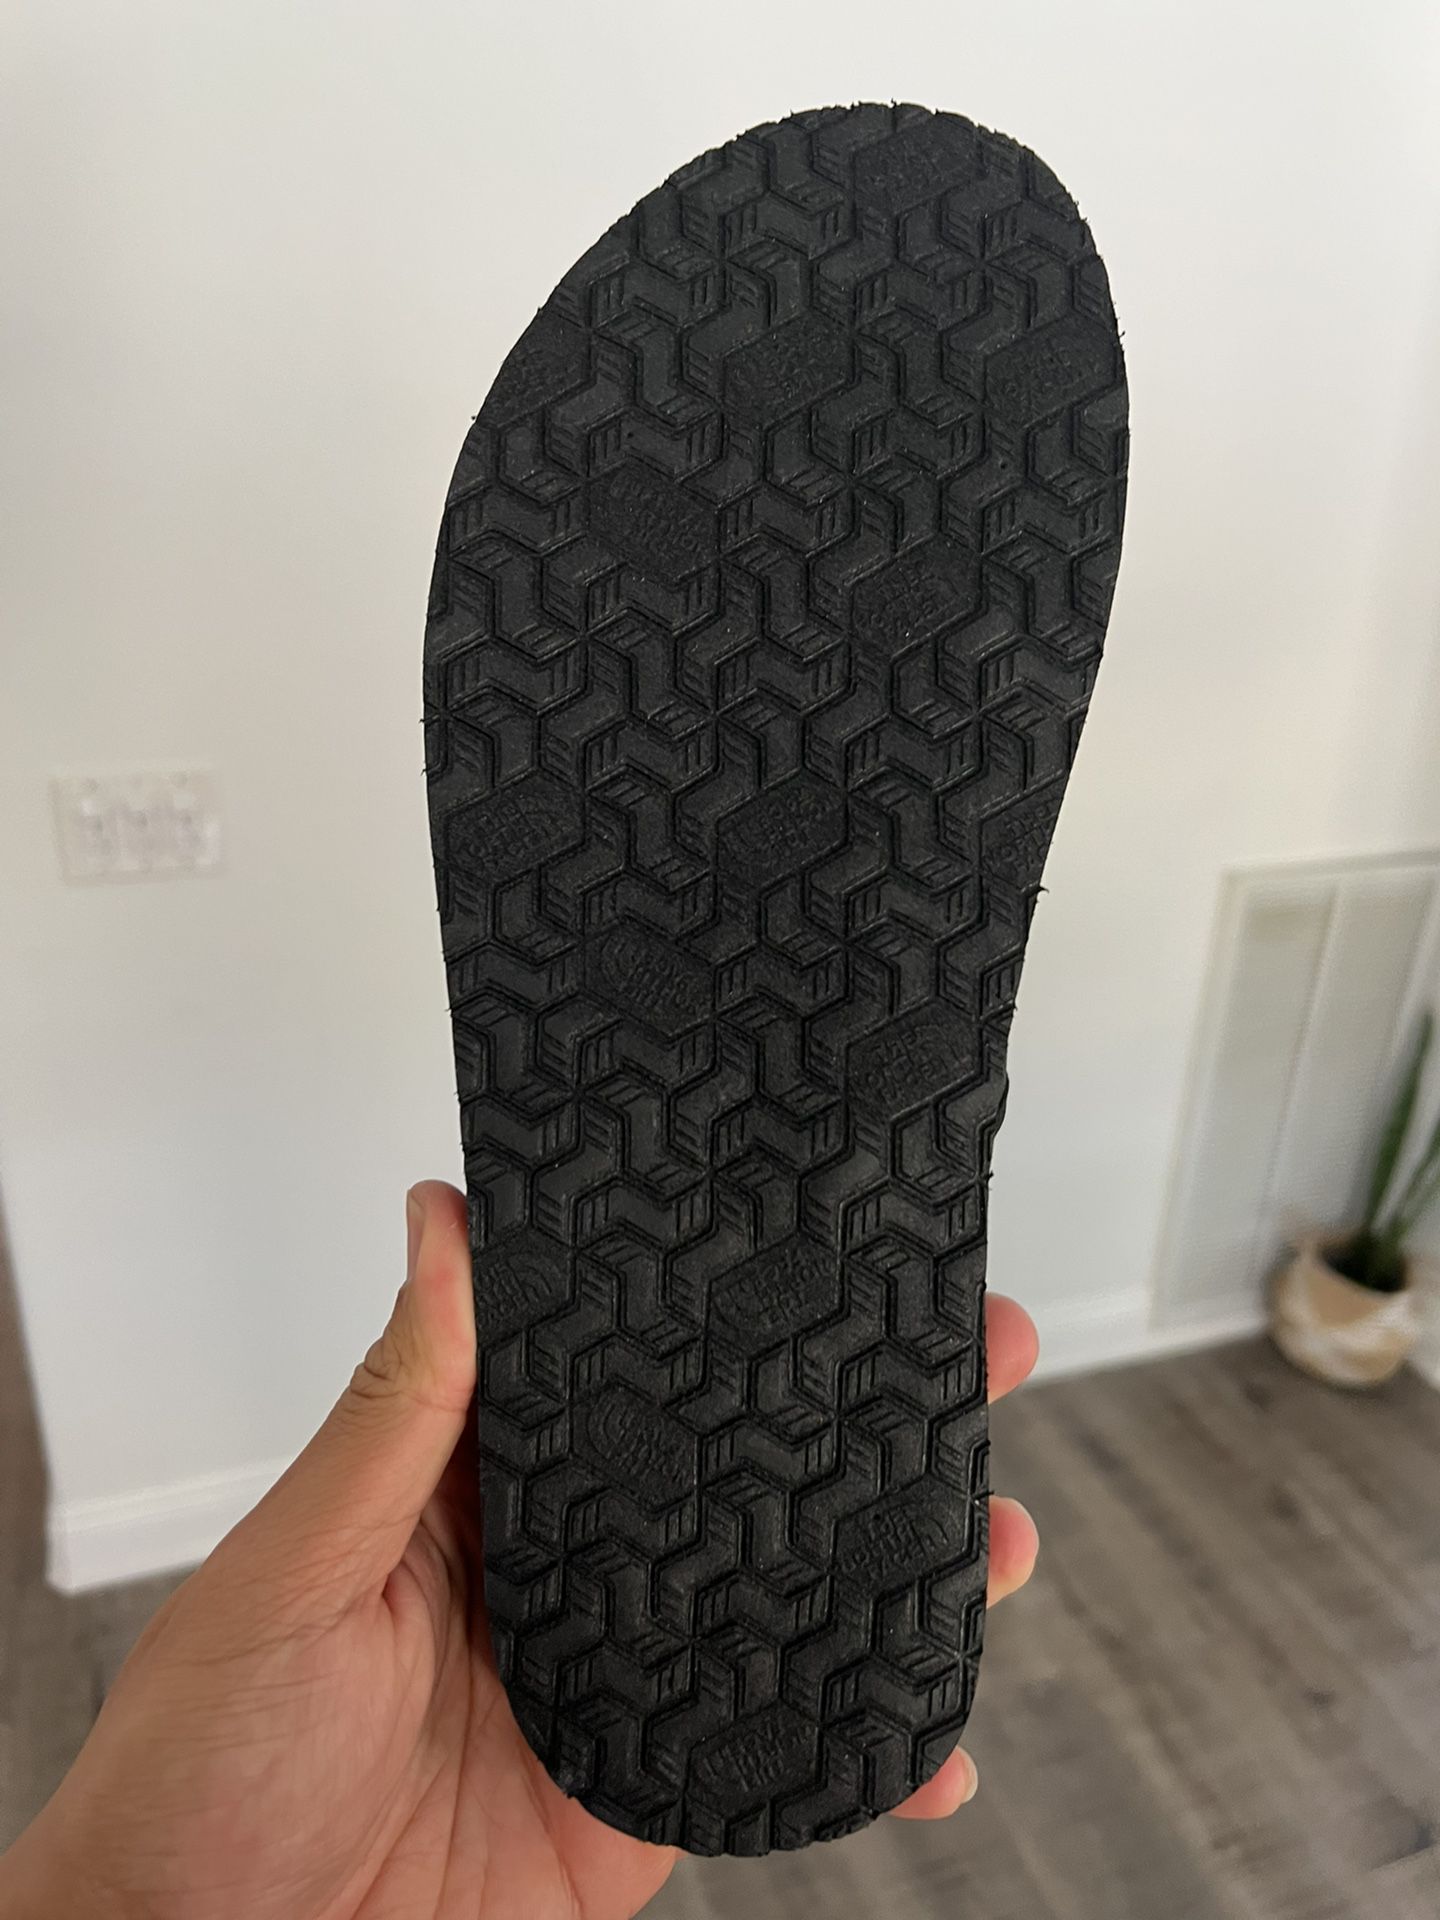 Supreme / North Face Trekking Sandals Size 10